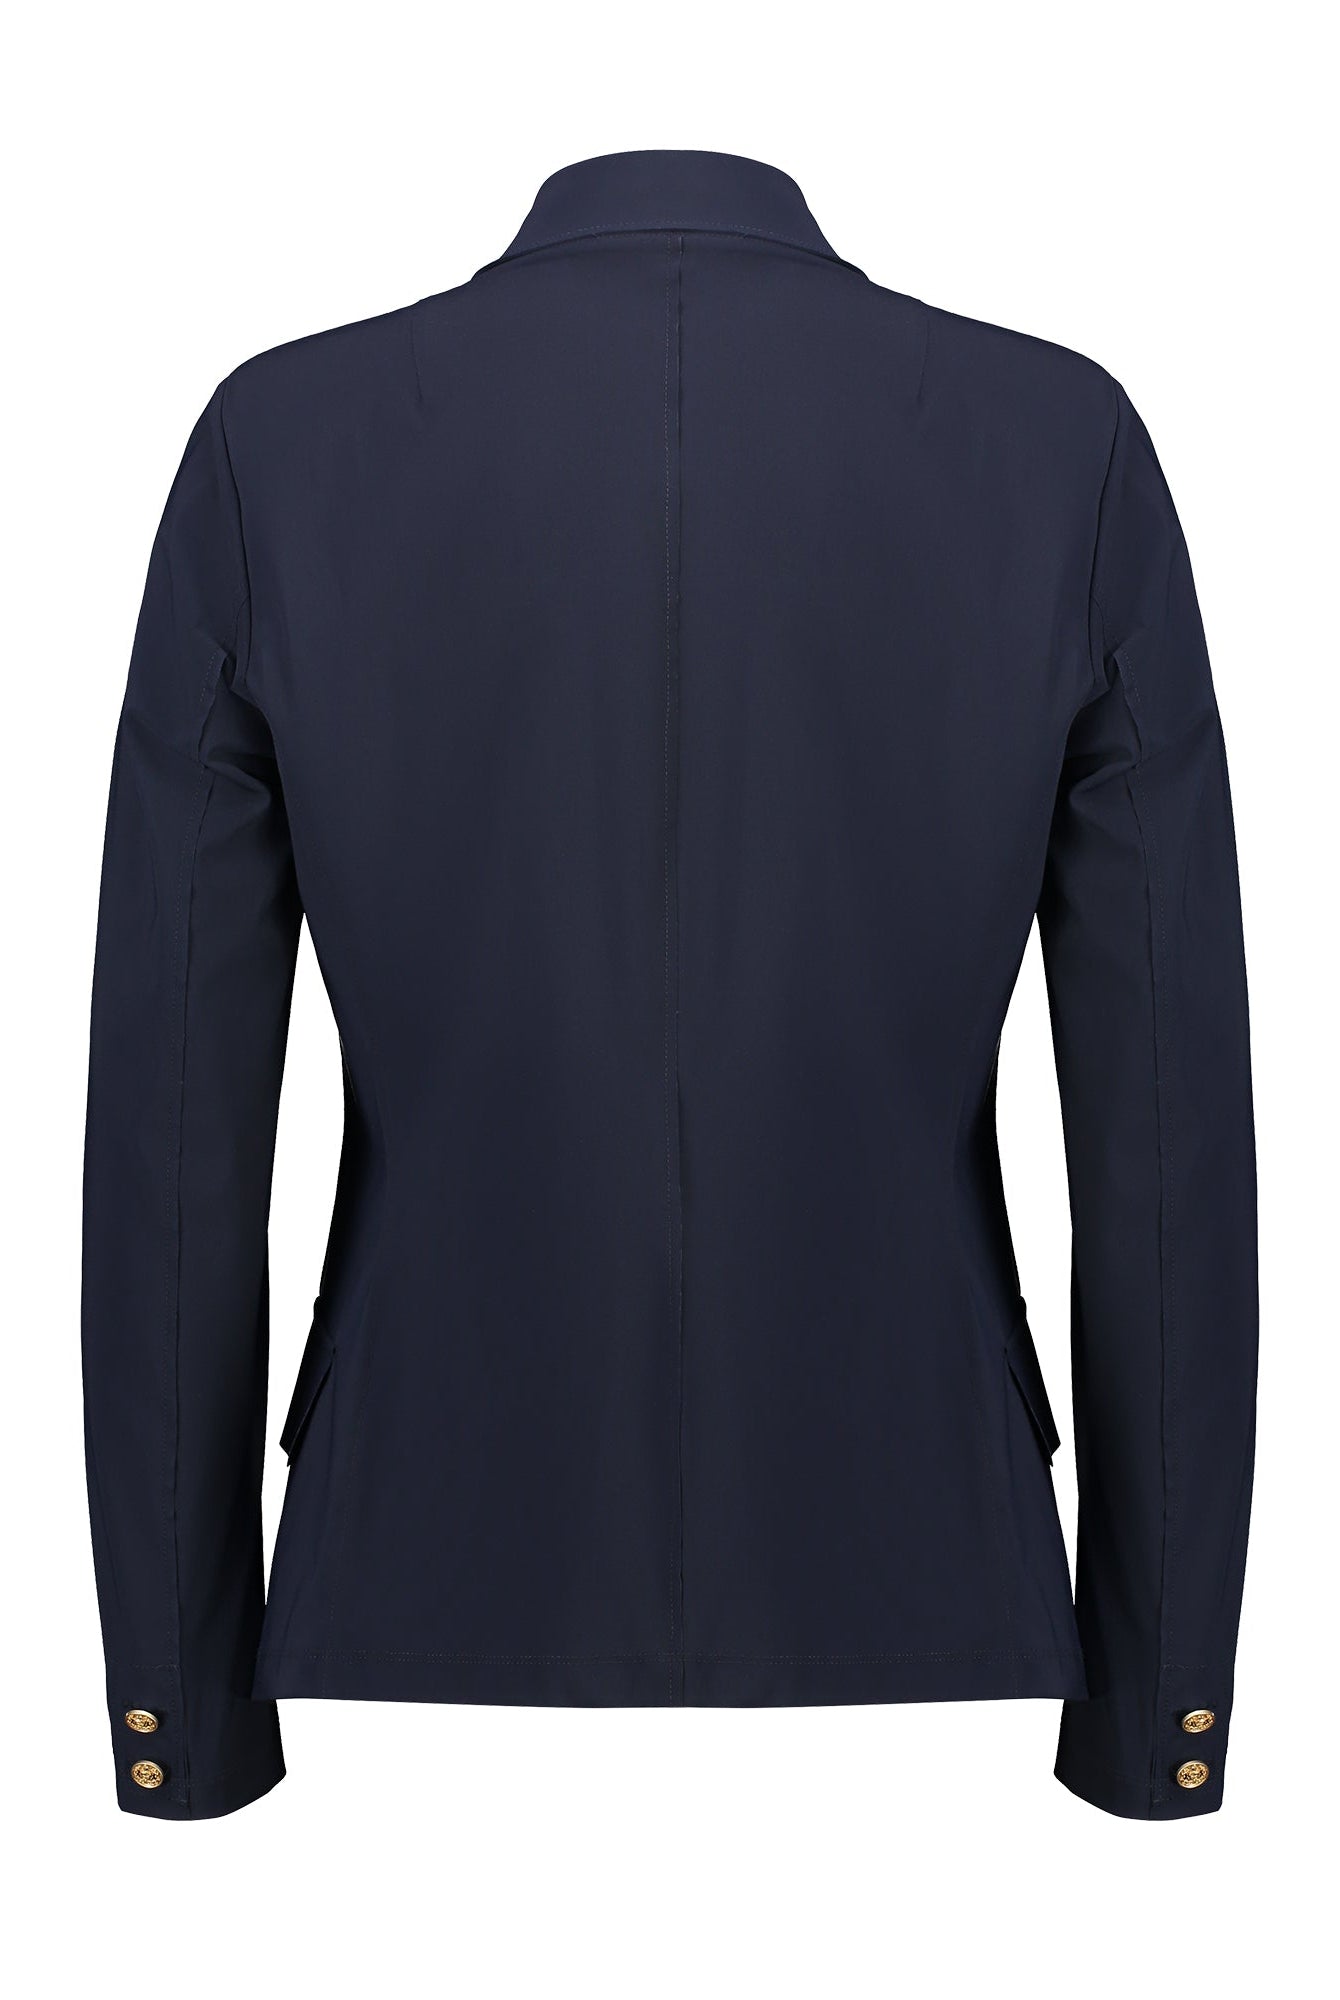 PAULA RYAN Tailored Jacket - Navy - Microjersey - PRE ORDER - Paula Ryan